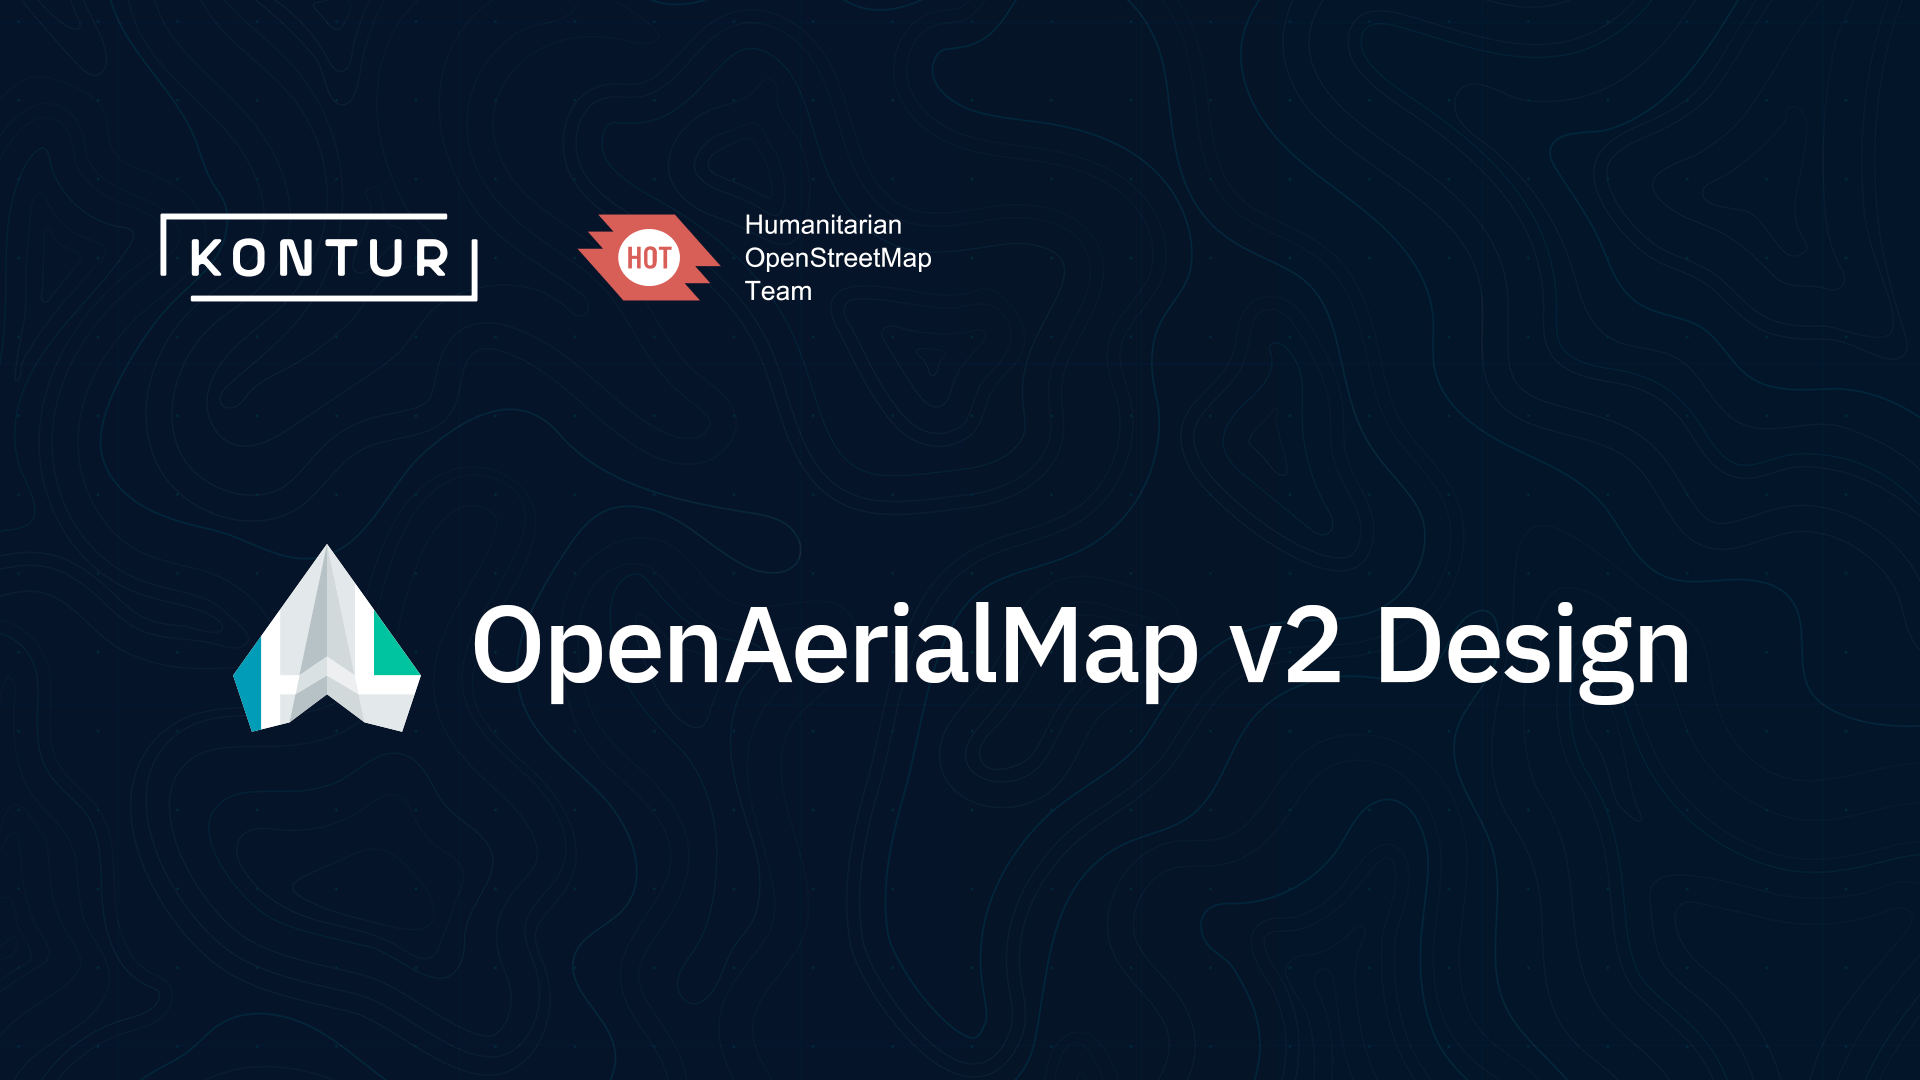 openaerialmap-v2-design-kicks-off